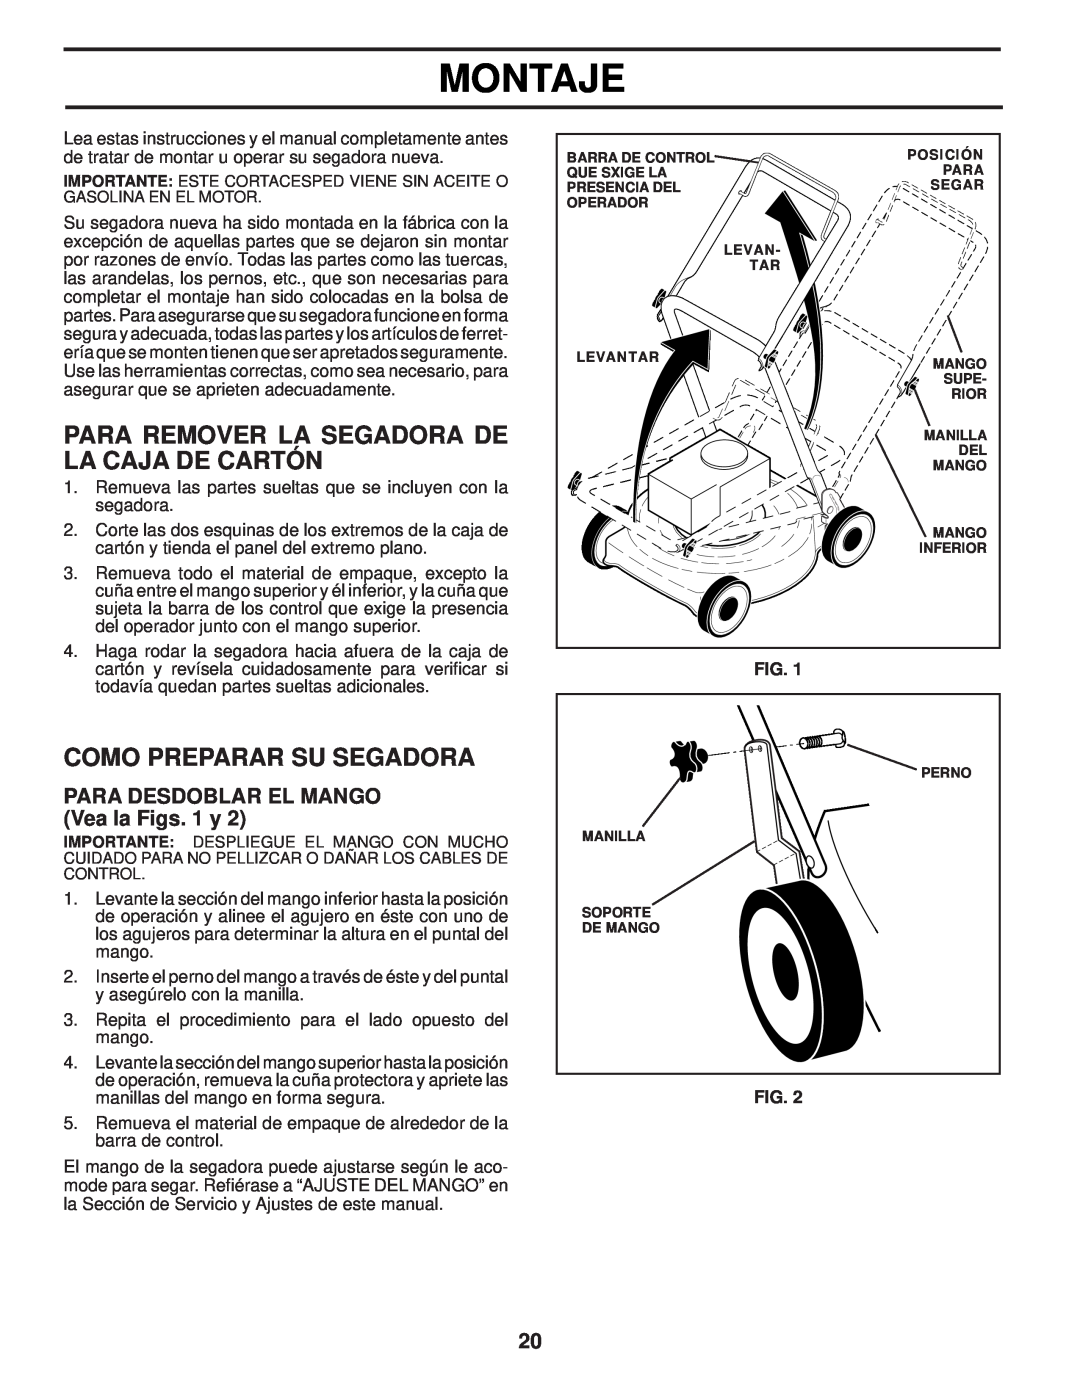 Husqvarna 87521HVE owner manual Montaje, Para Remover La Segadora De La Caja De Cartón, Como Preparar Su Segadora 